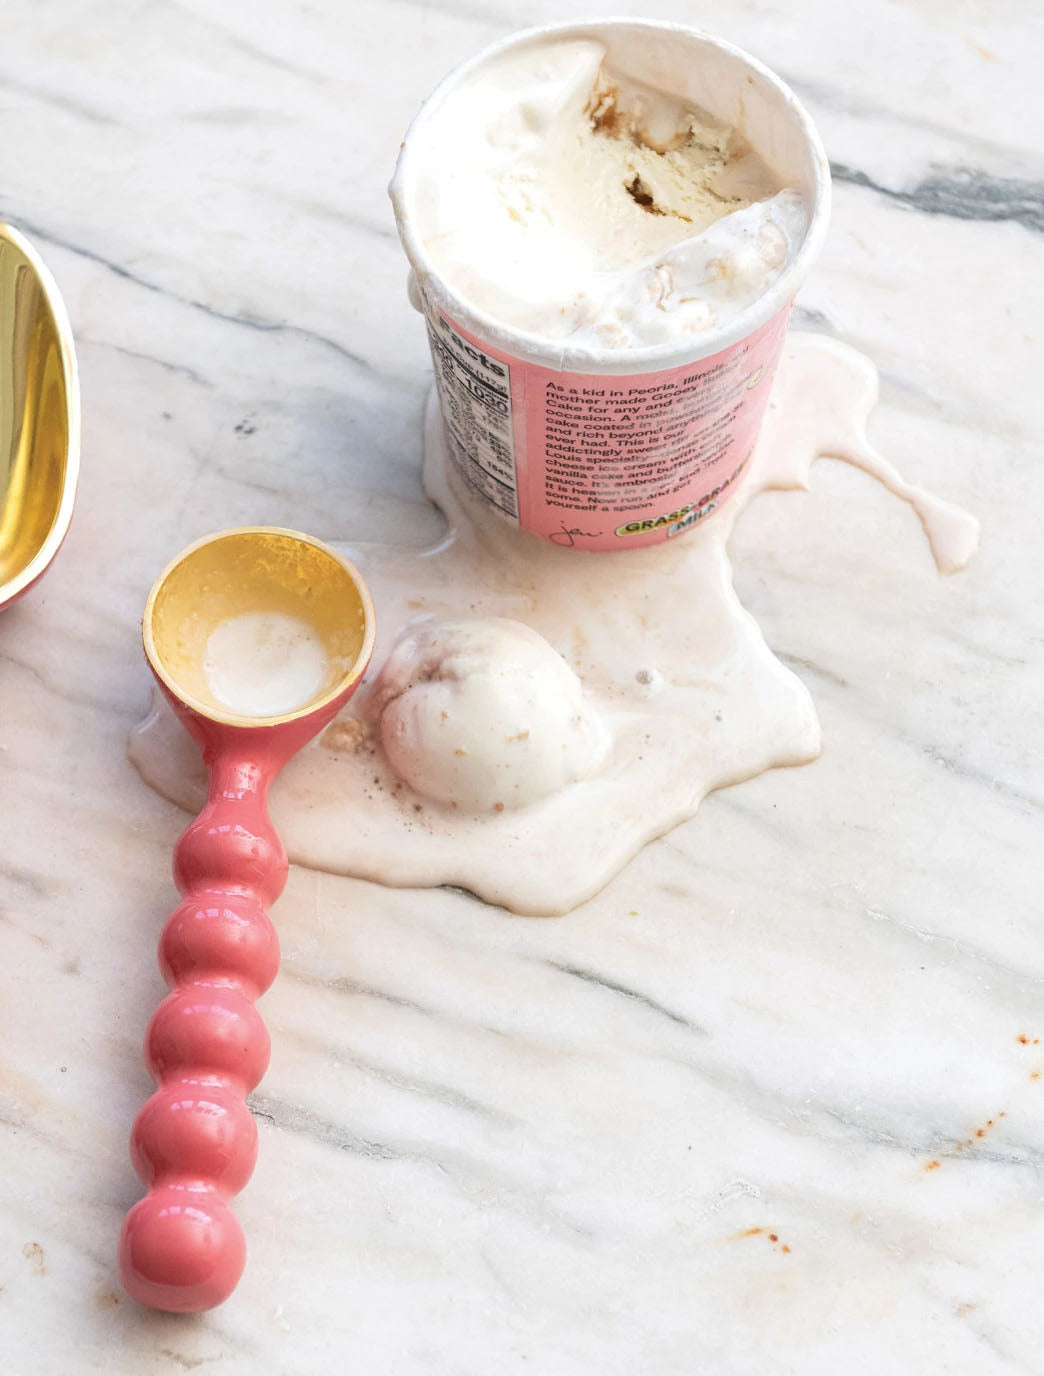 Pink Enameled Ice Cream Scoop